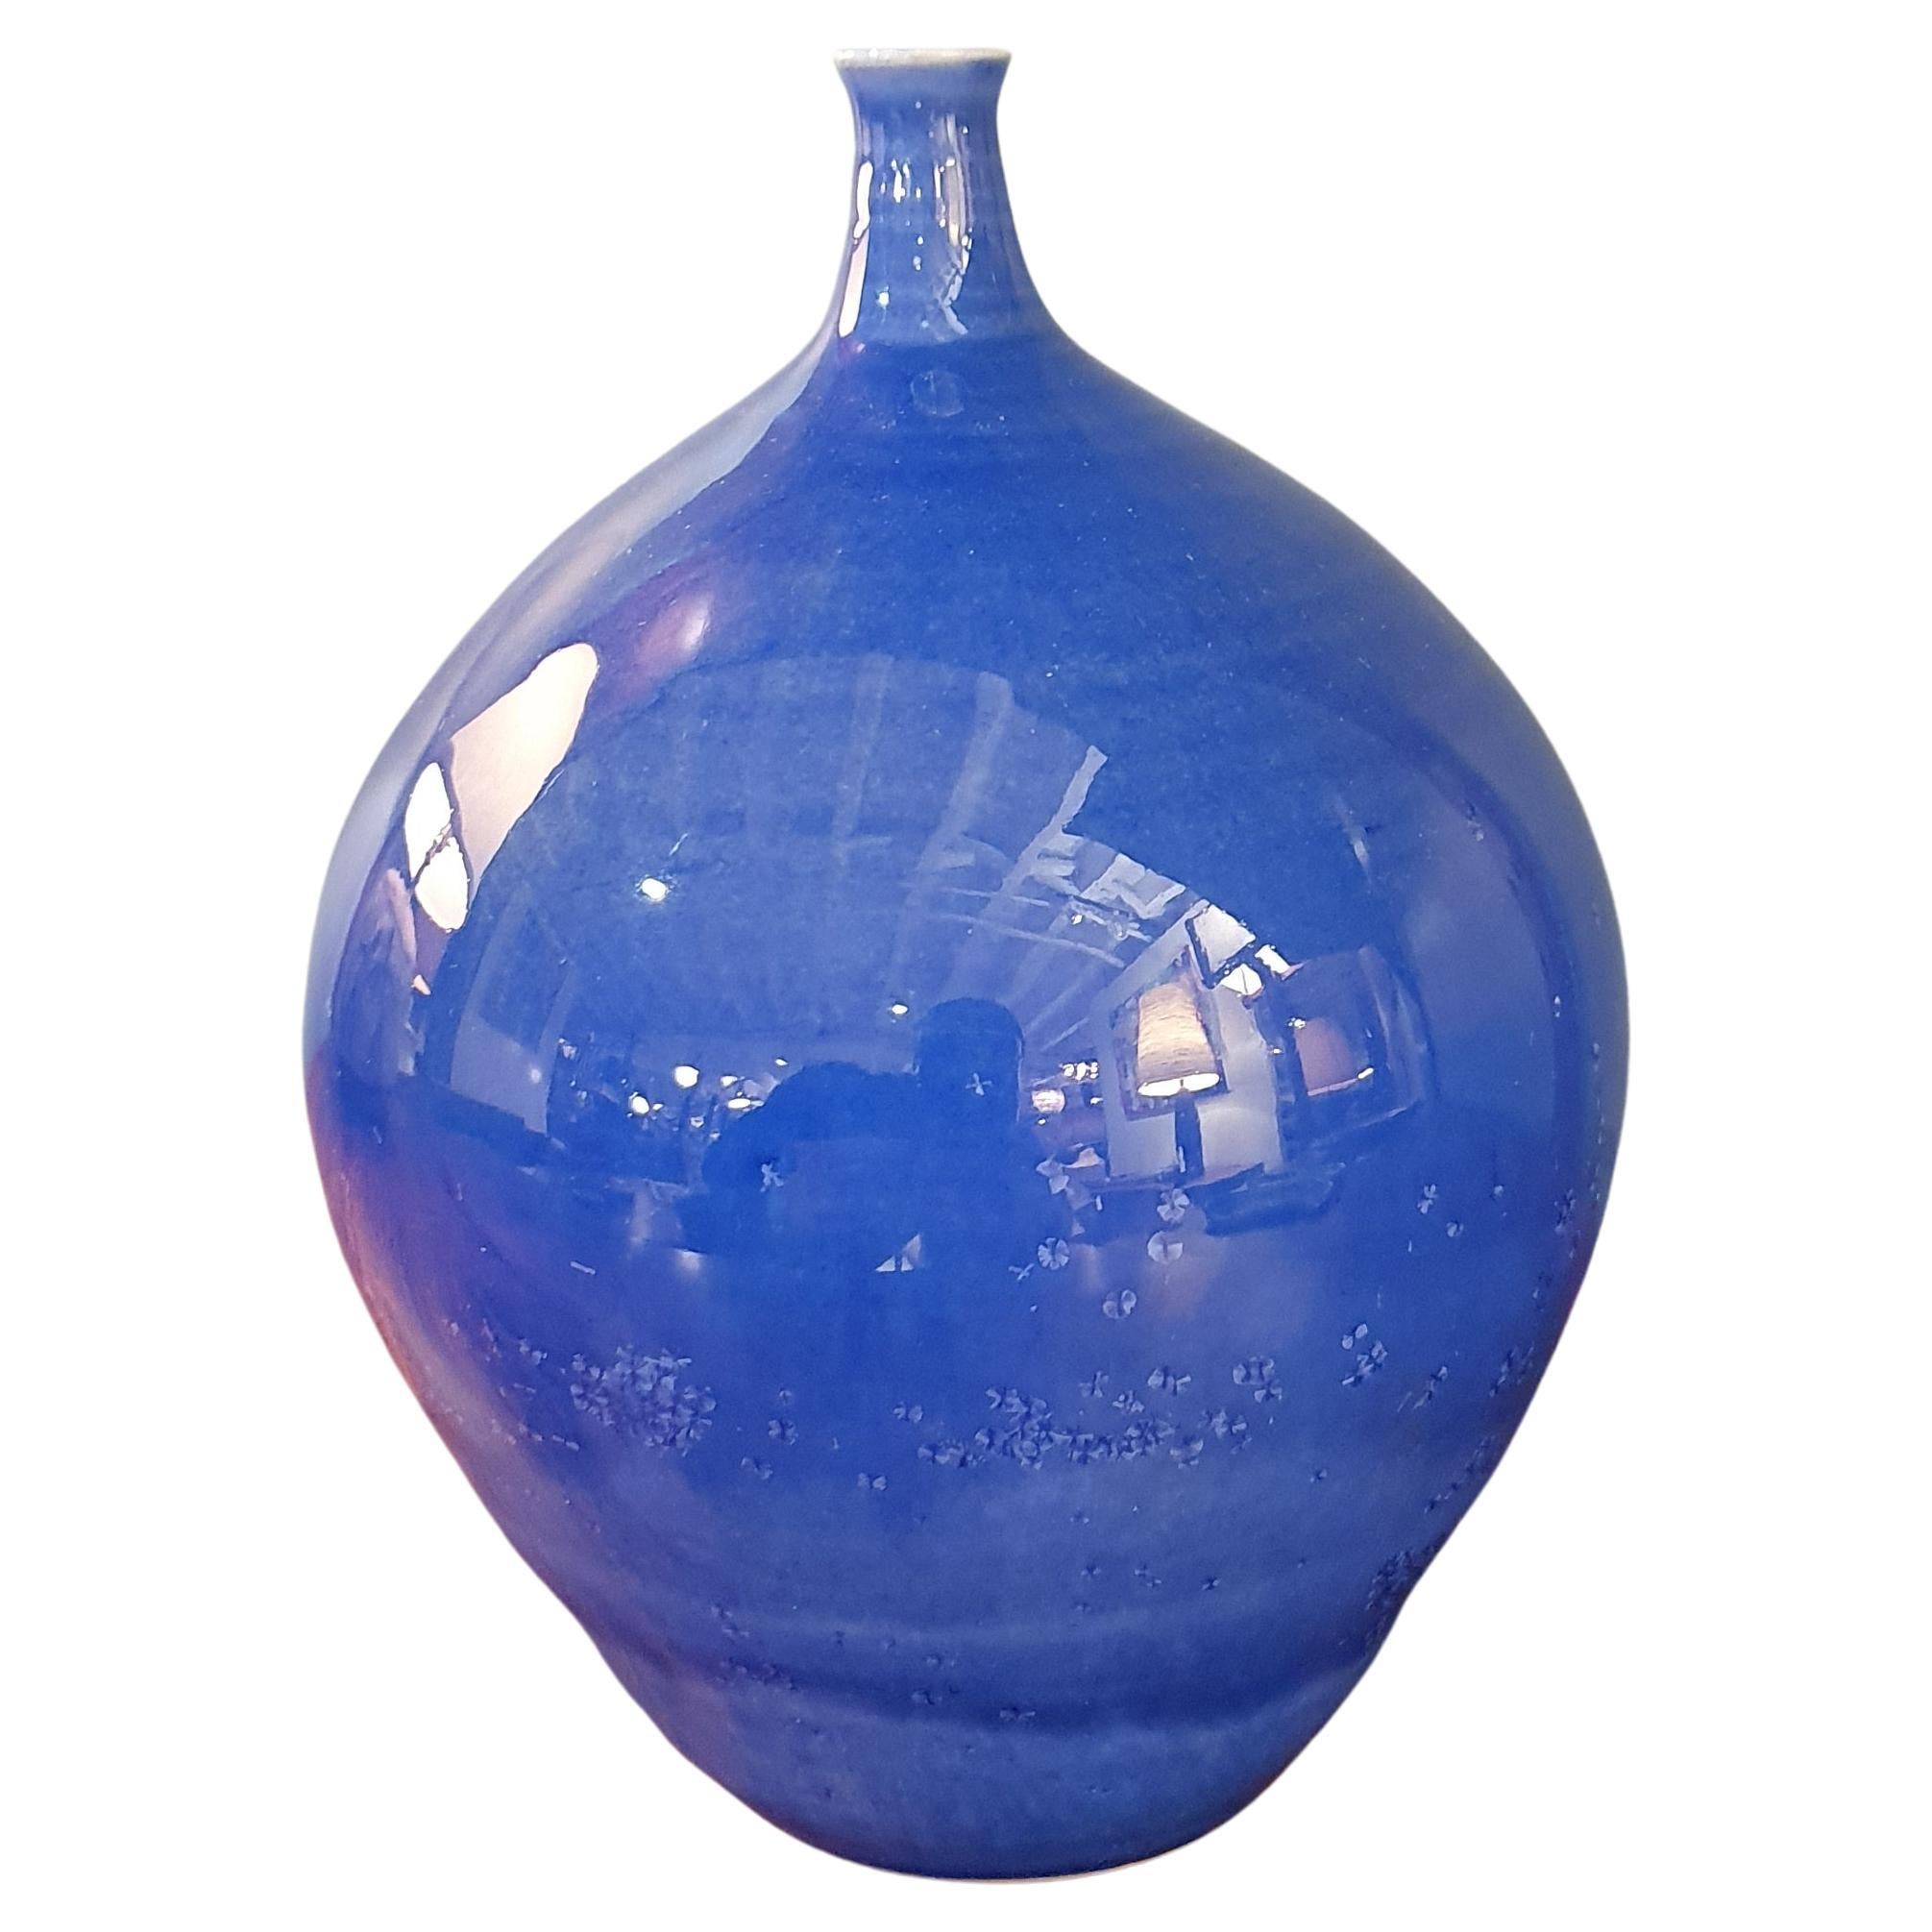 Beautiful Studio Pottery Bud Vase